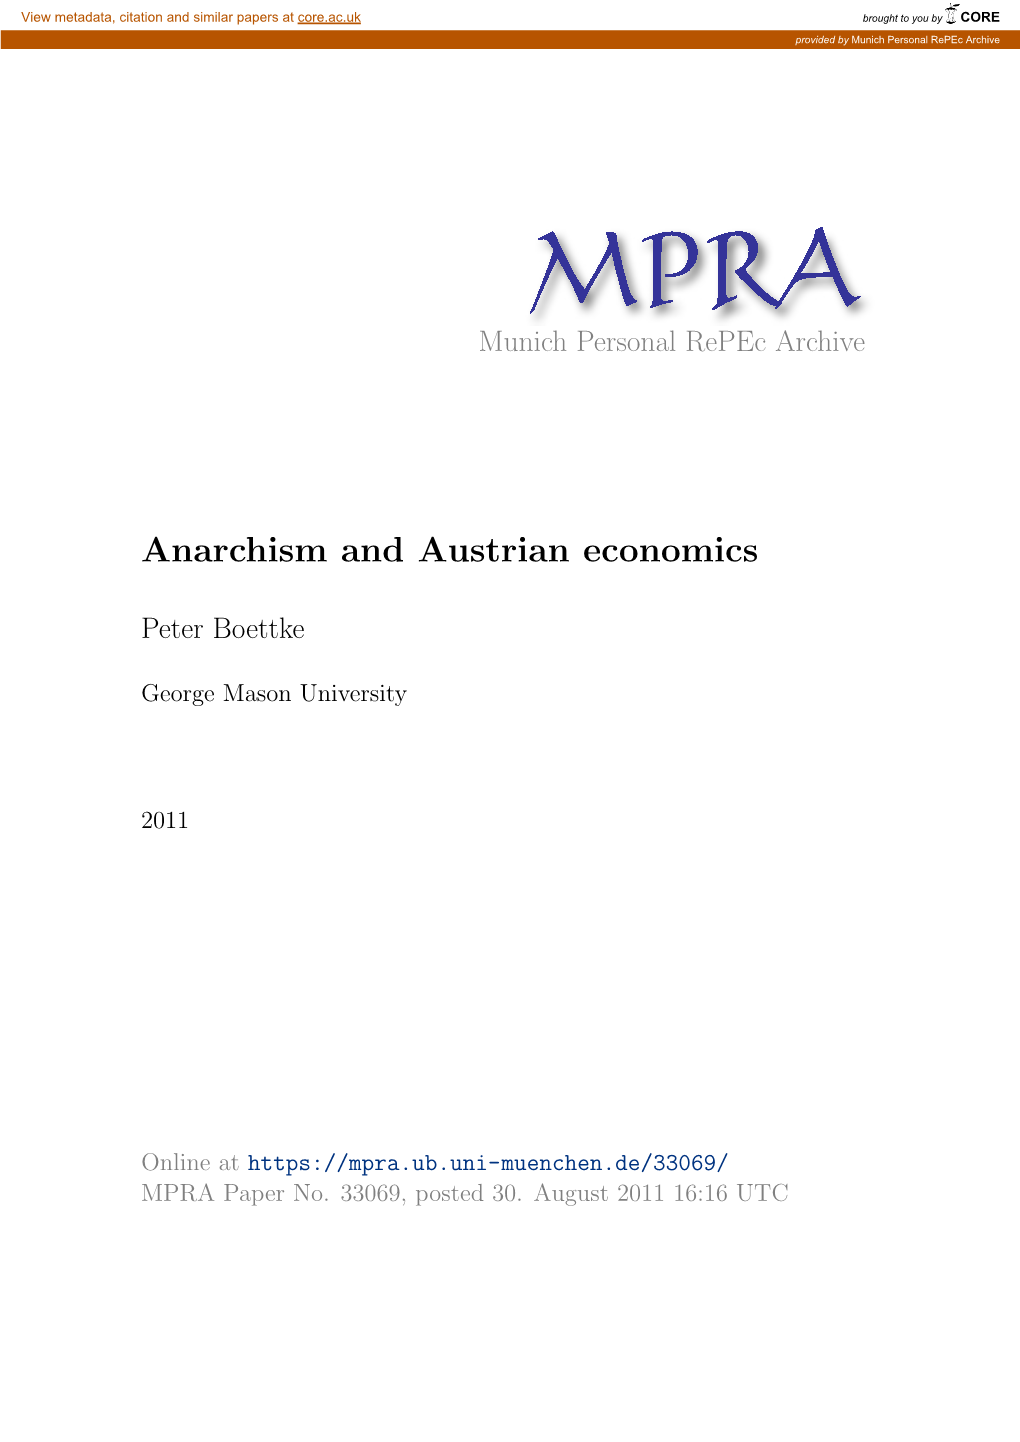 Anarchism and Austrian Economics